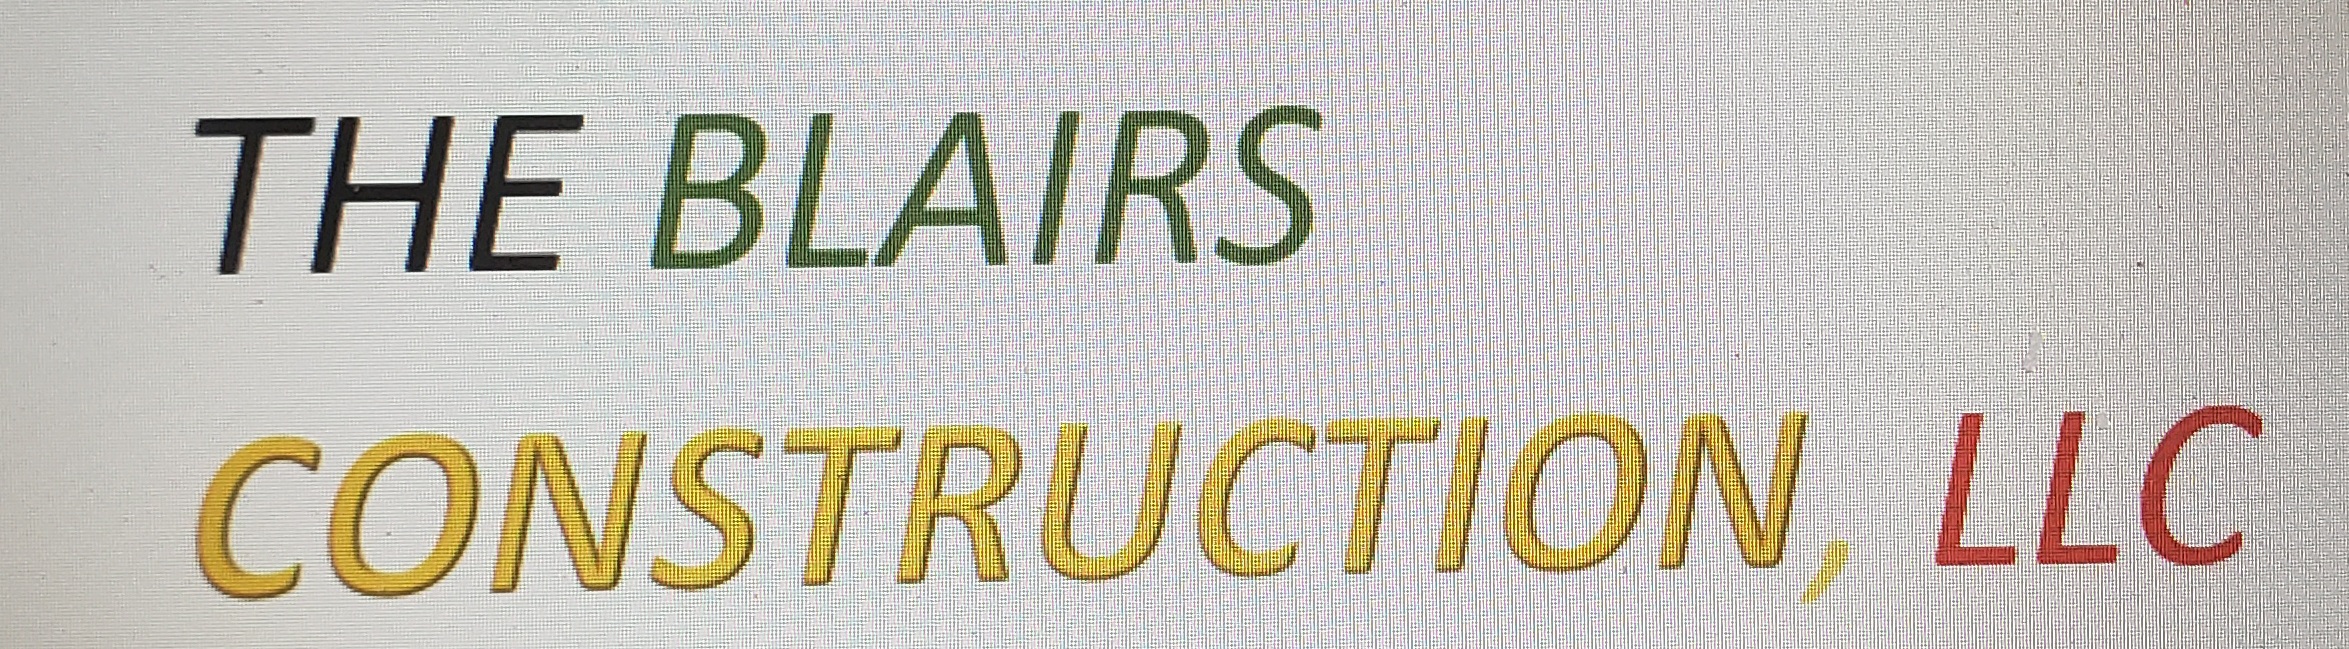 The Blairs Construction, LLC Logo